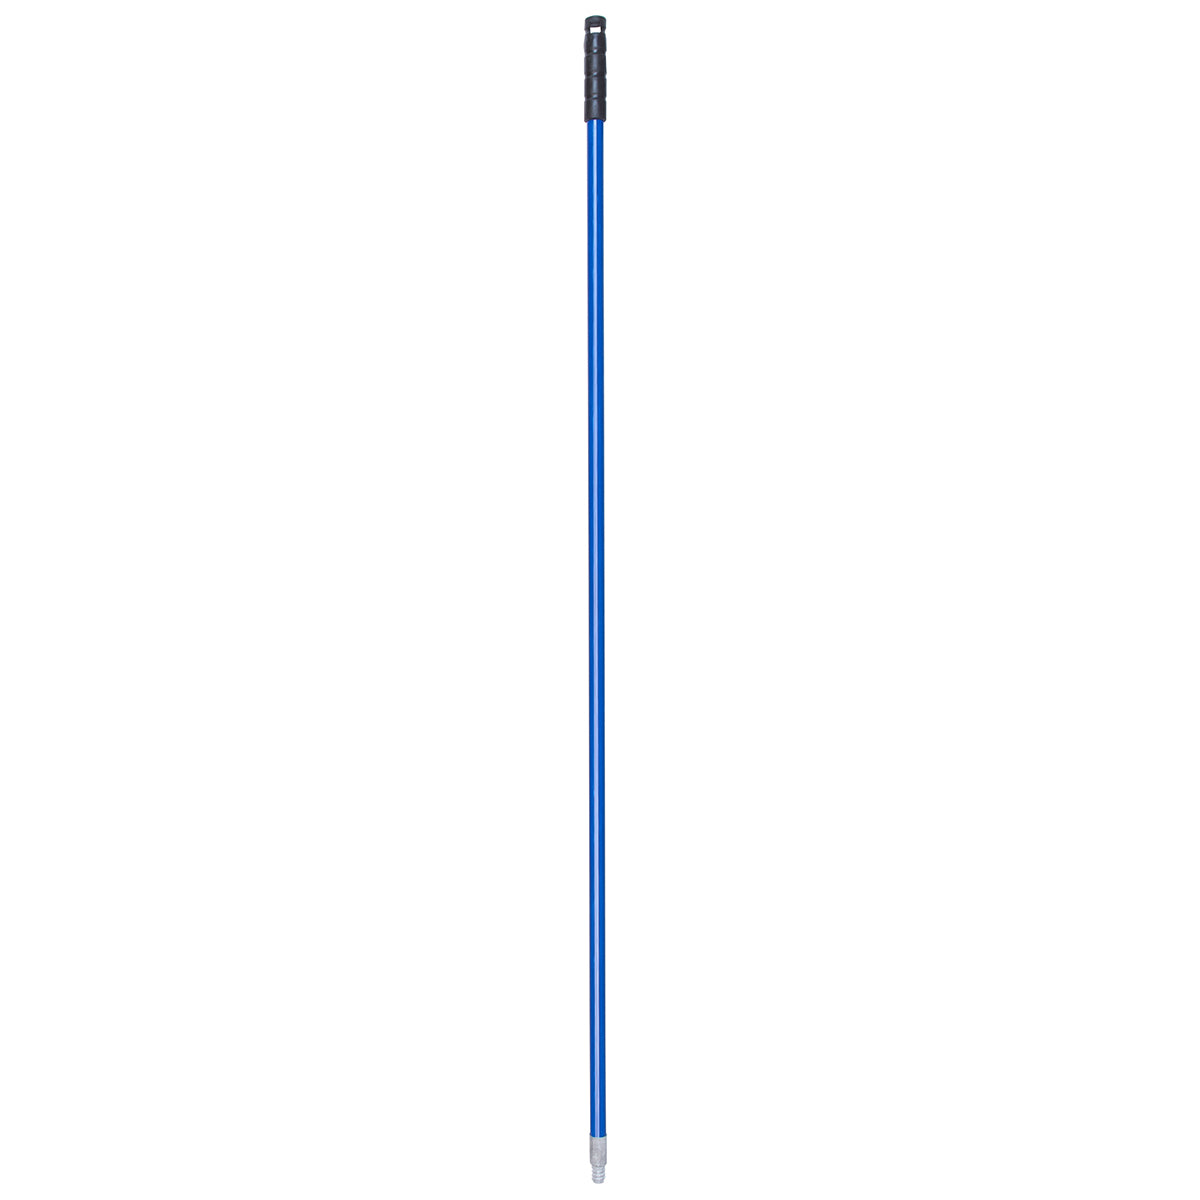 Baston de Fibra de Vidrio 1.5 Metros de Largo Color Azul